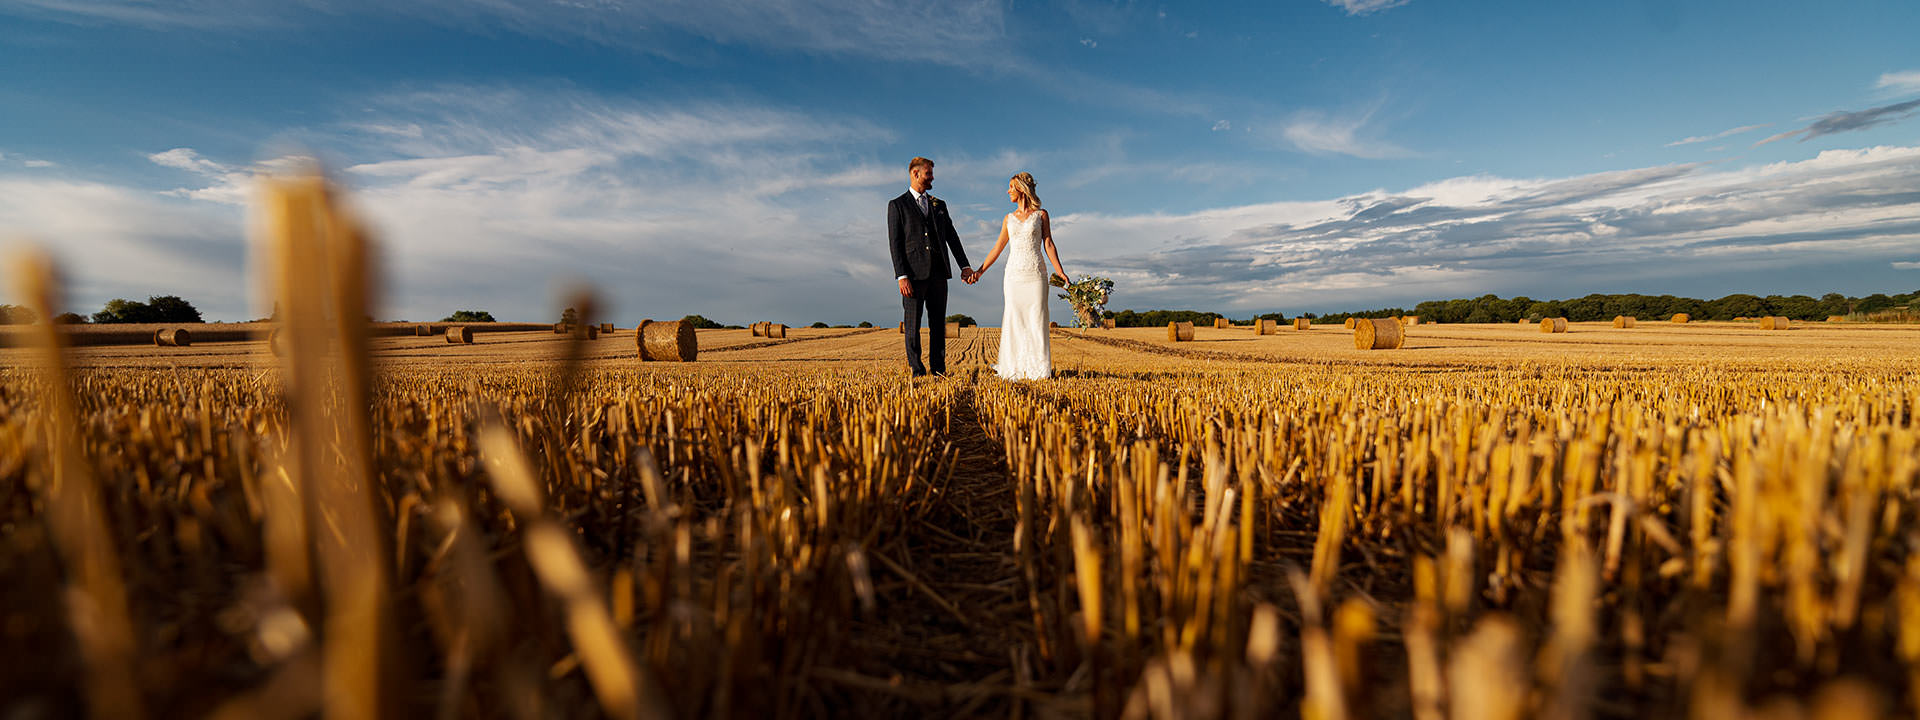 Swancar Farm bride and groom in field